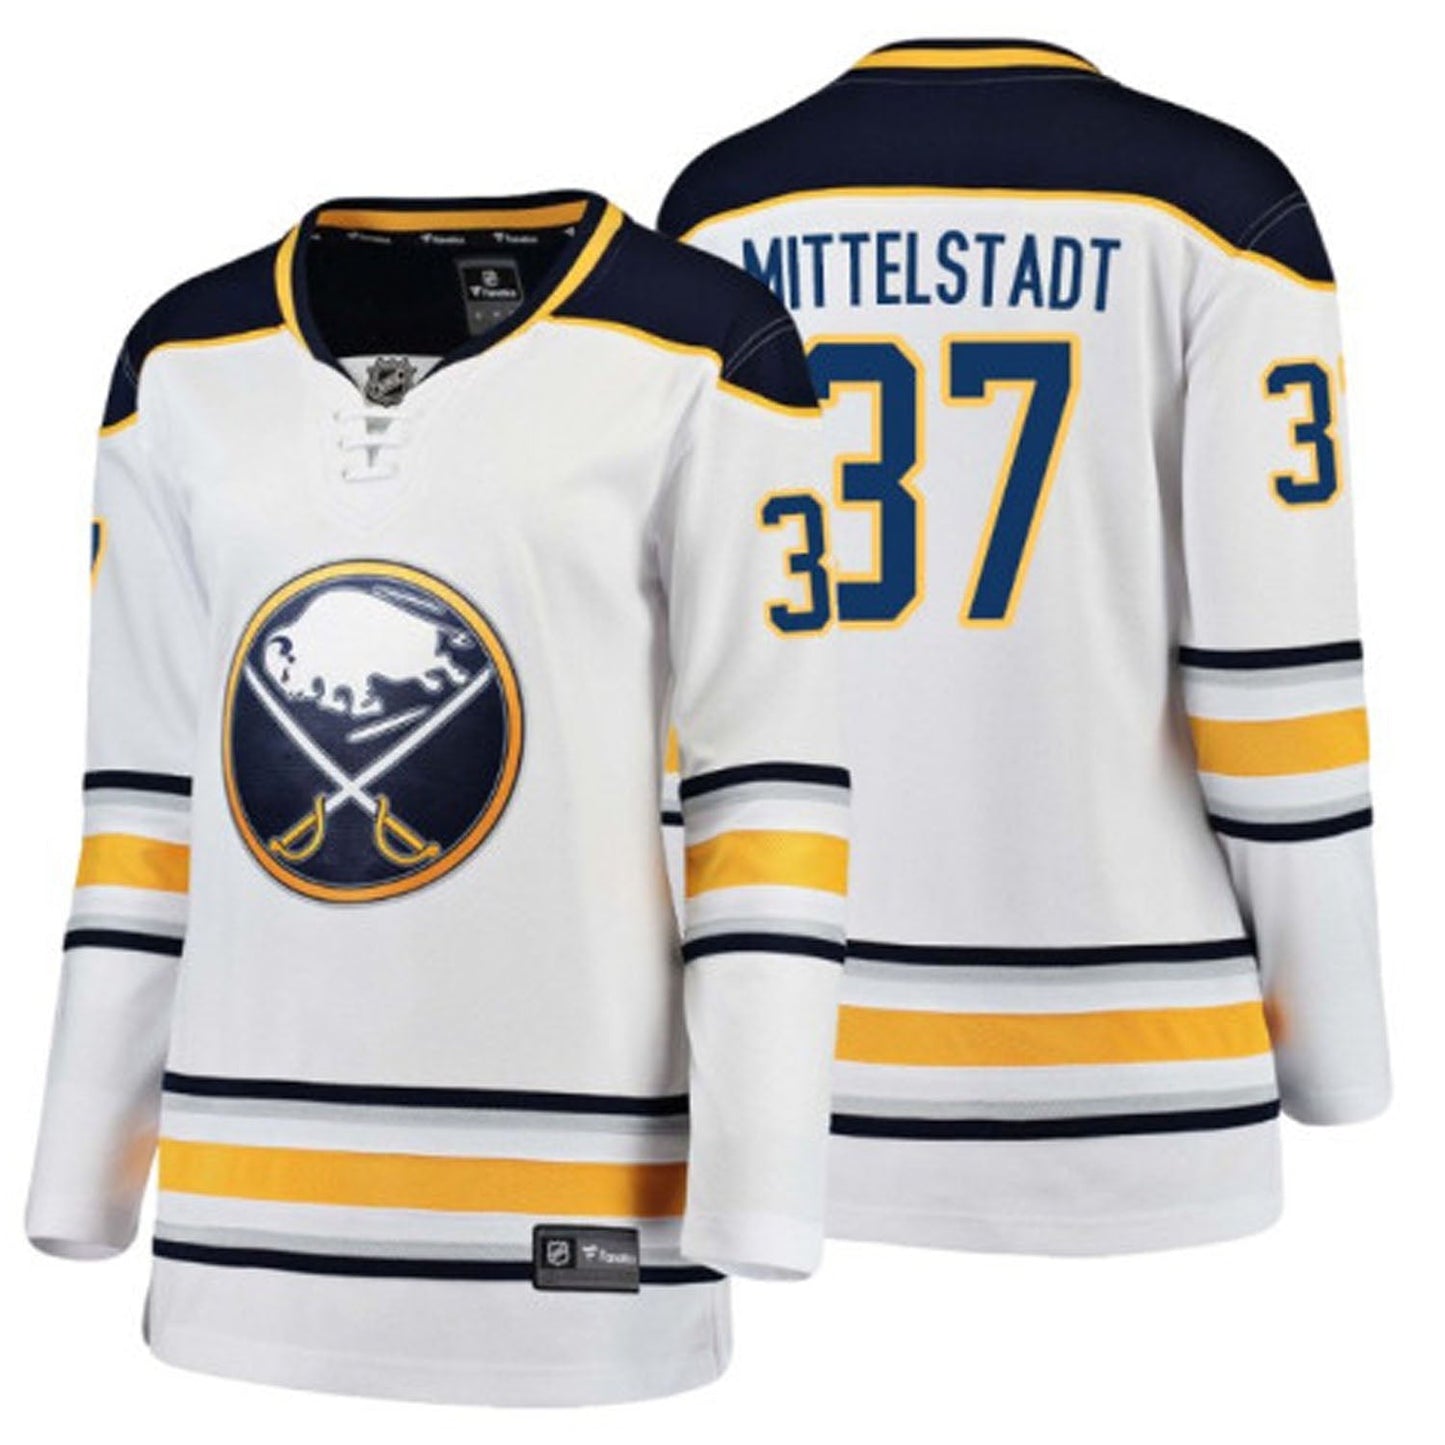 NHL Casey Mittelstadt Buffalo Sabres 37 Jersey